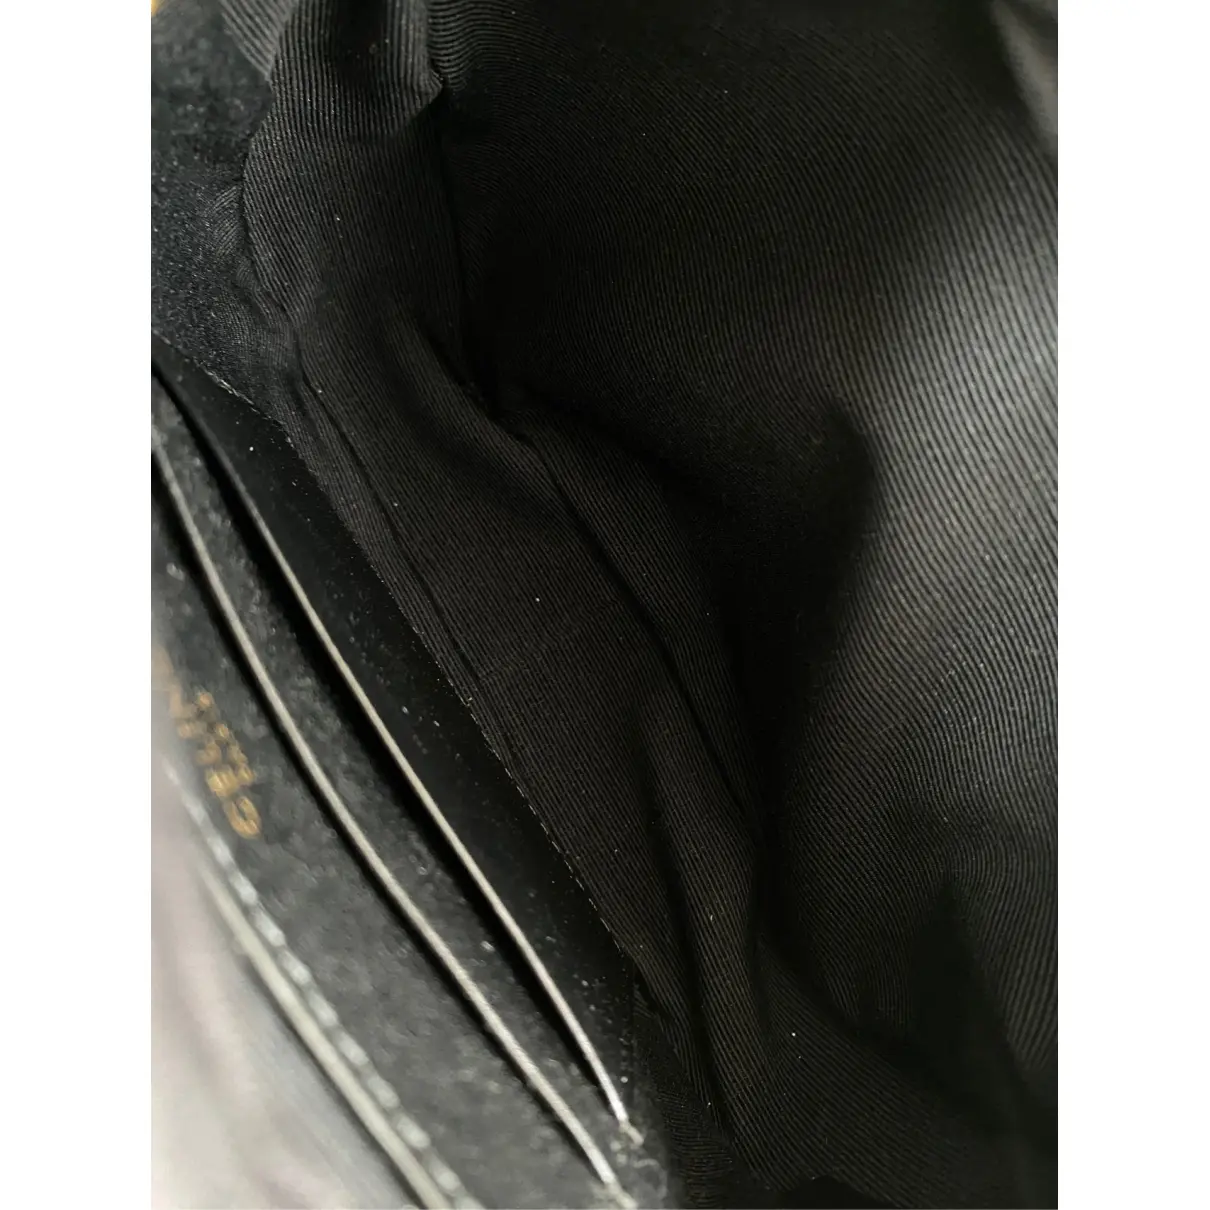 Buy Celine Charm leather handbag online